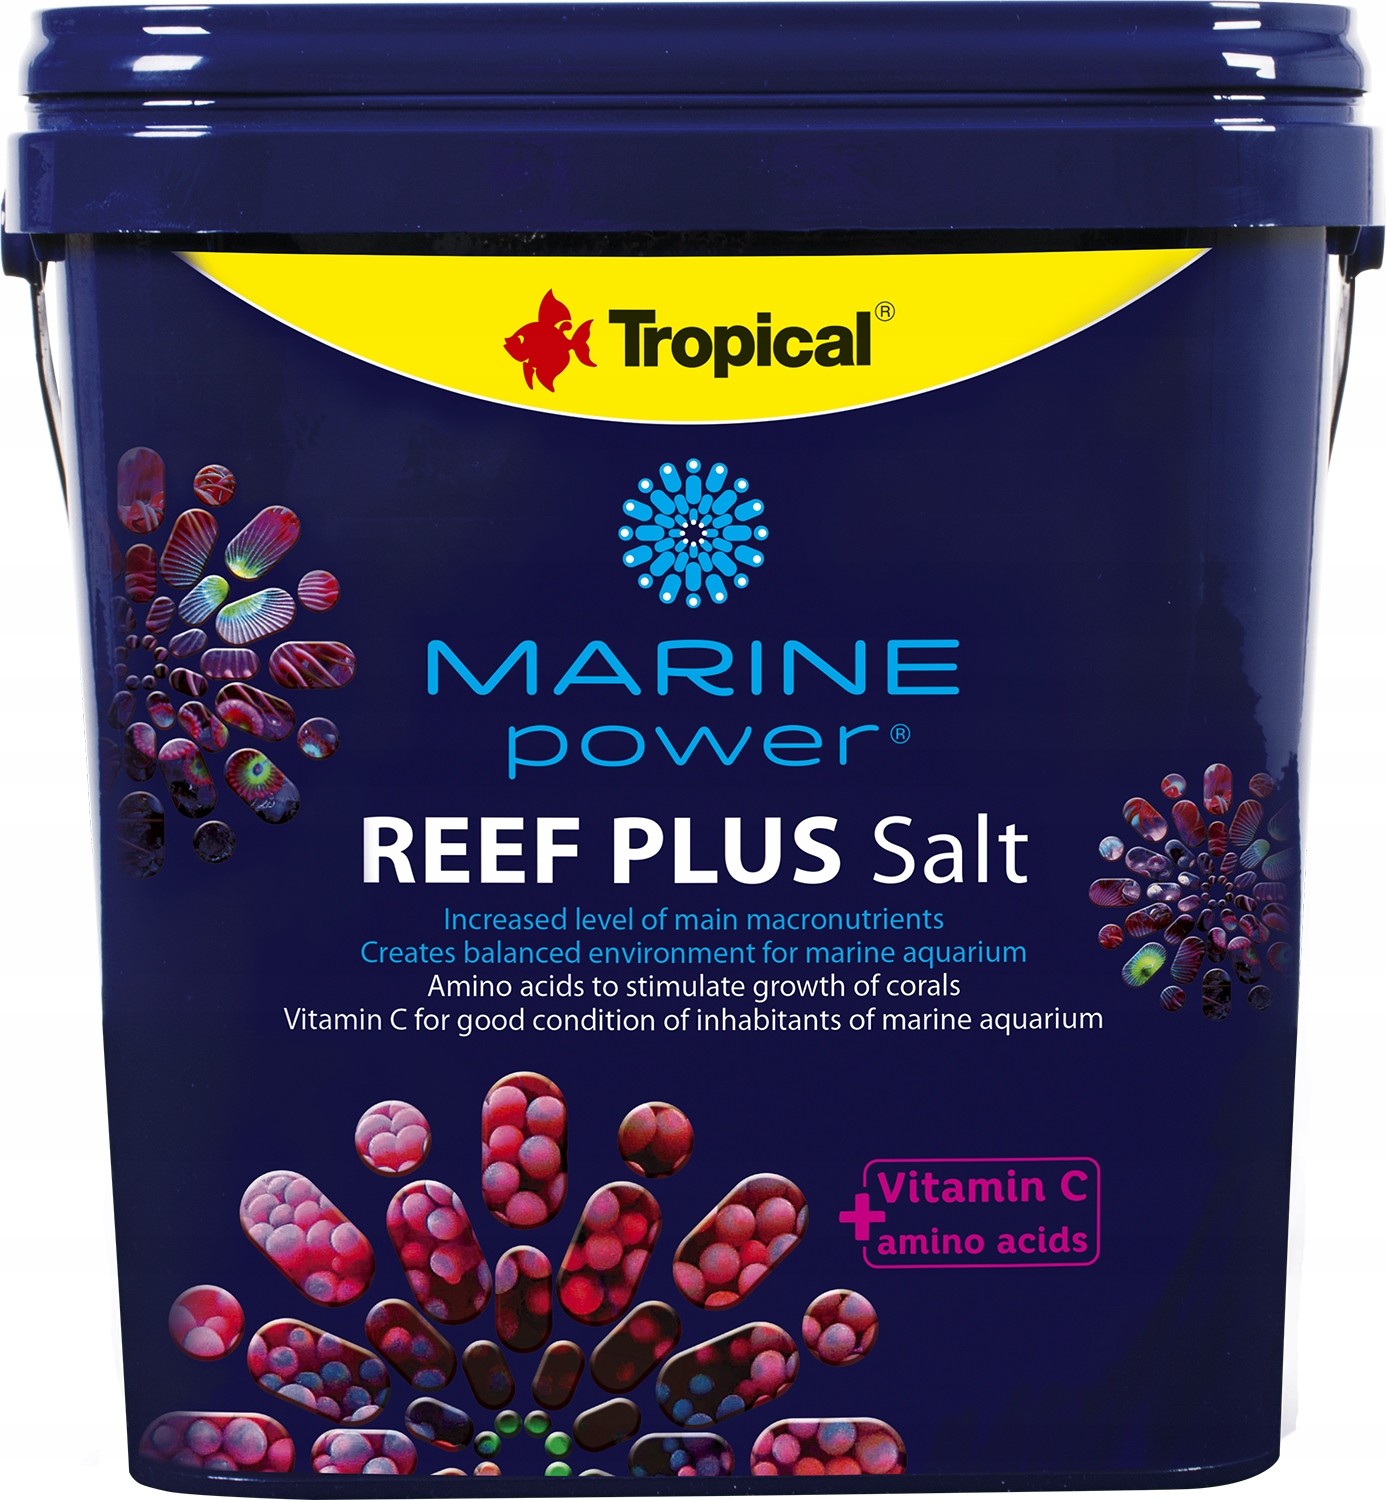 Marine Power Reef Plus Salt 5kg